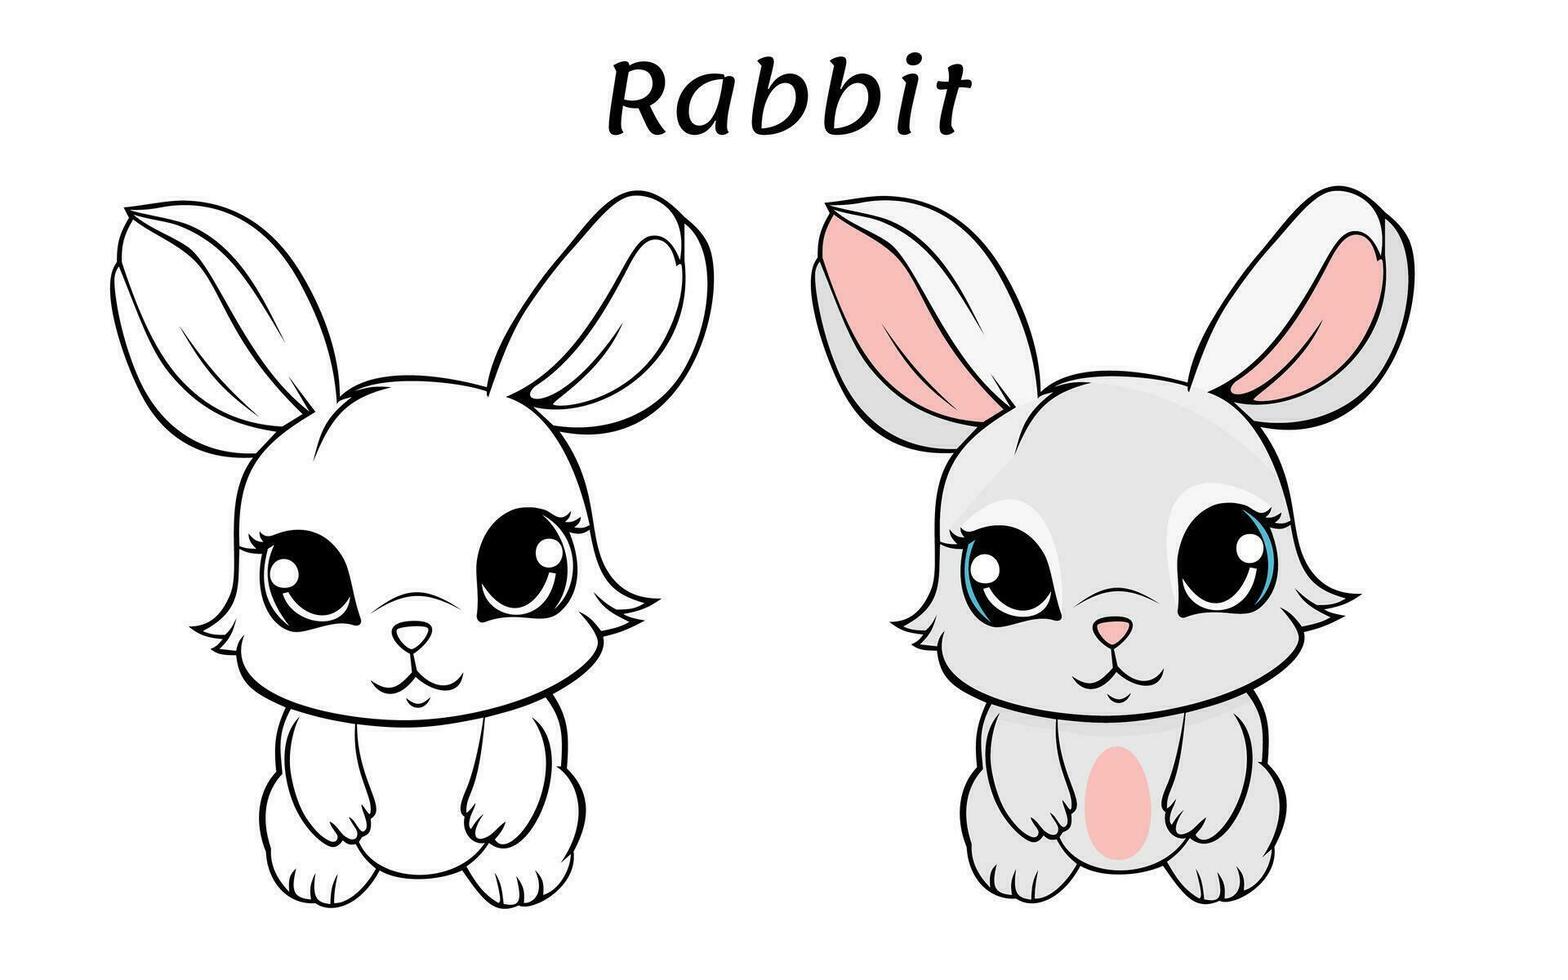 Cute Rabbit Animal Coloring Book Illustration vector